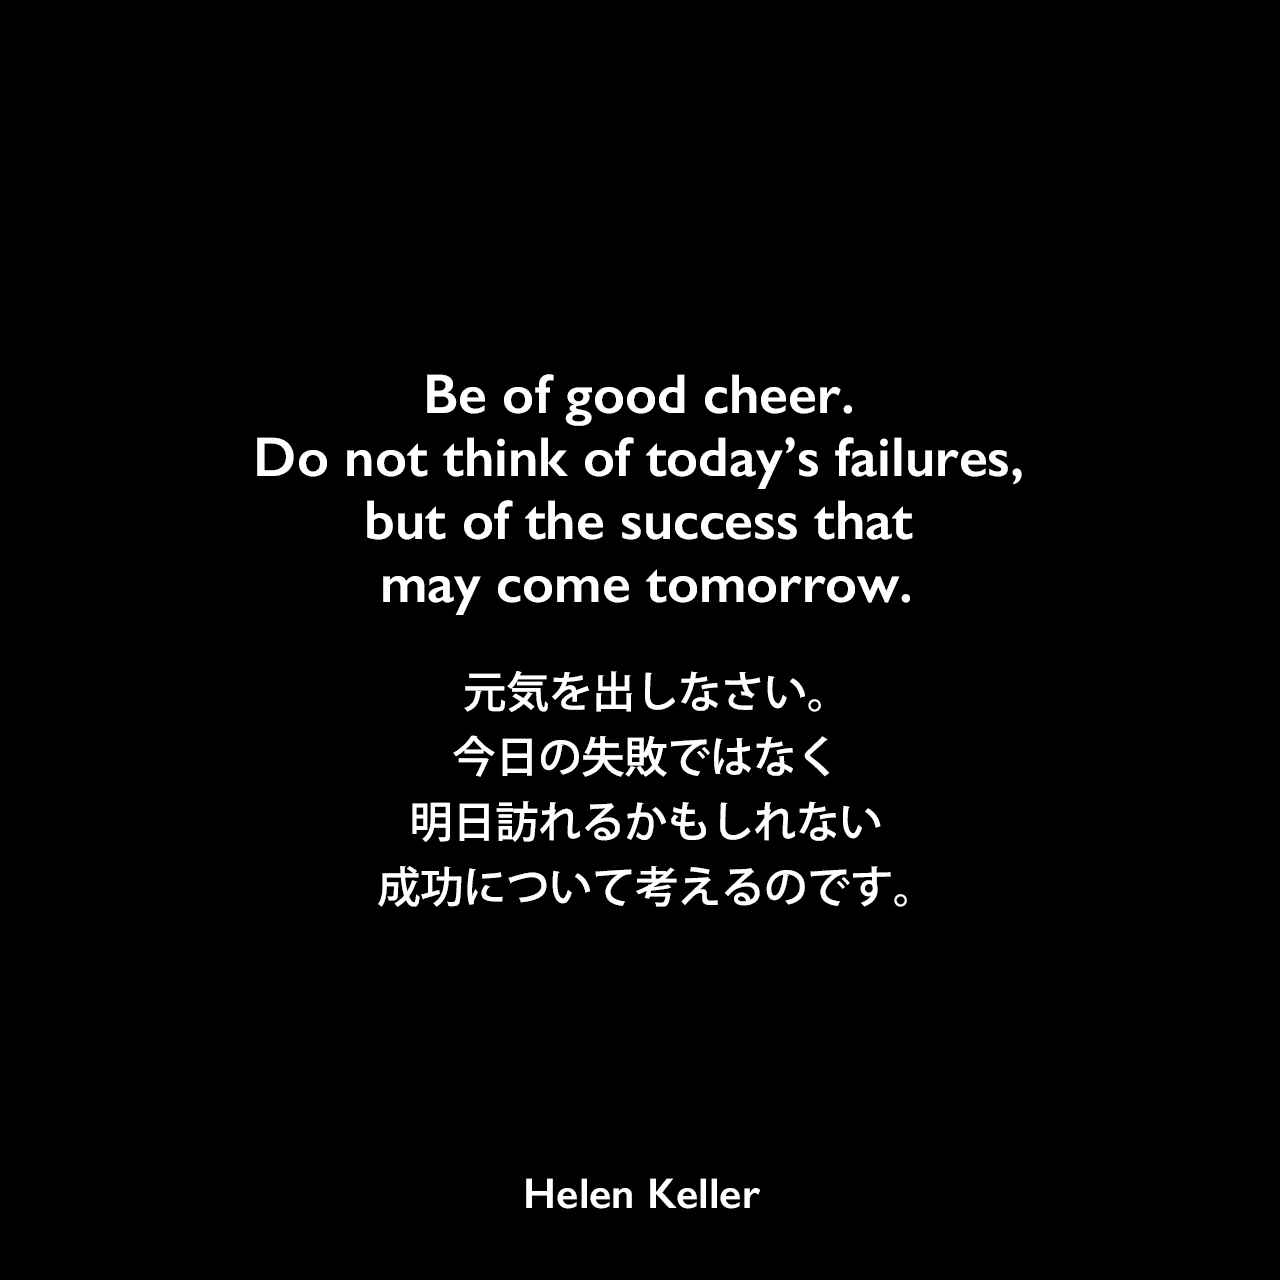 Be of good cheer. Do not think of today’s failures, but of the success that may come tomorrow.元気を出しなさい。今日の失敗ではなく、明日訪れるかもしれない成功について考えるのです。Helen Keller